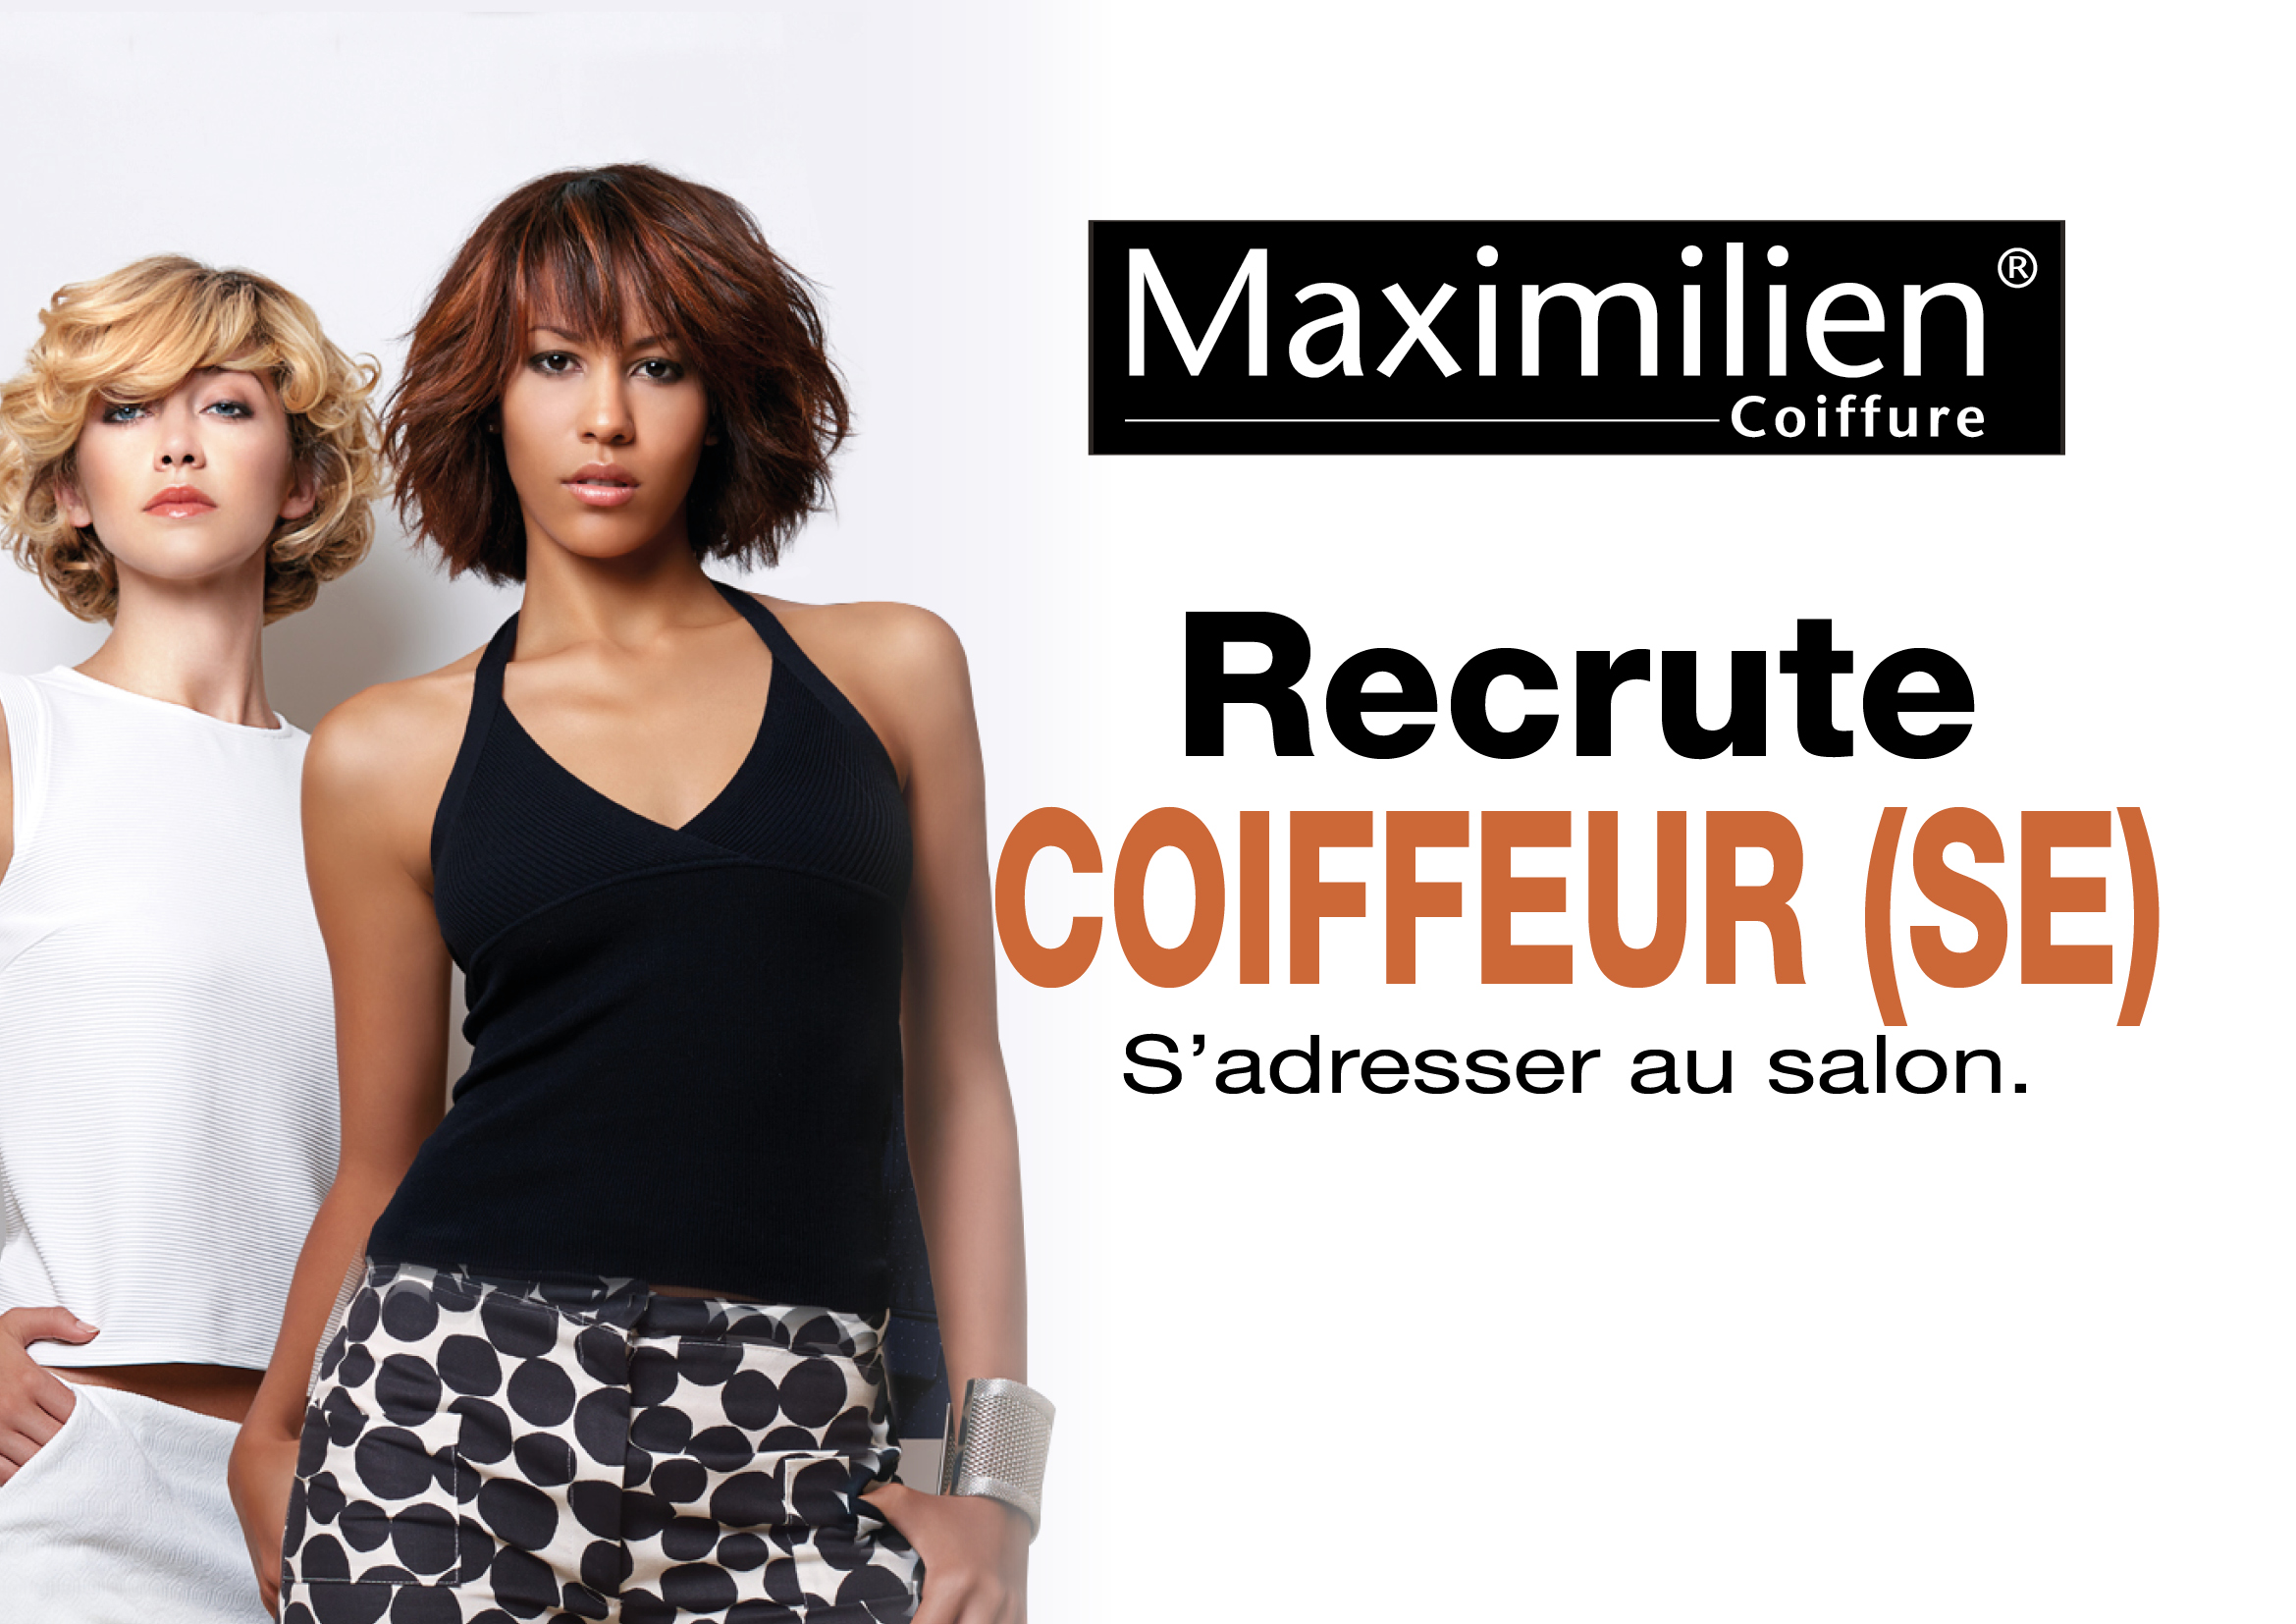 Maximilien Coiffure recrute